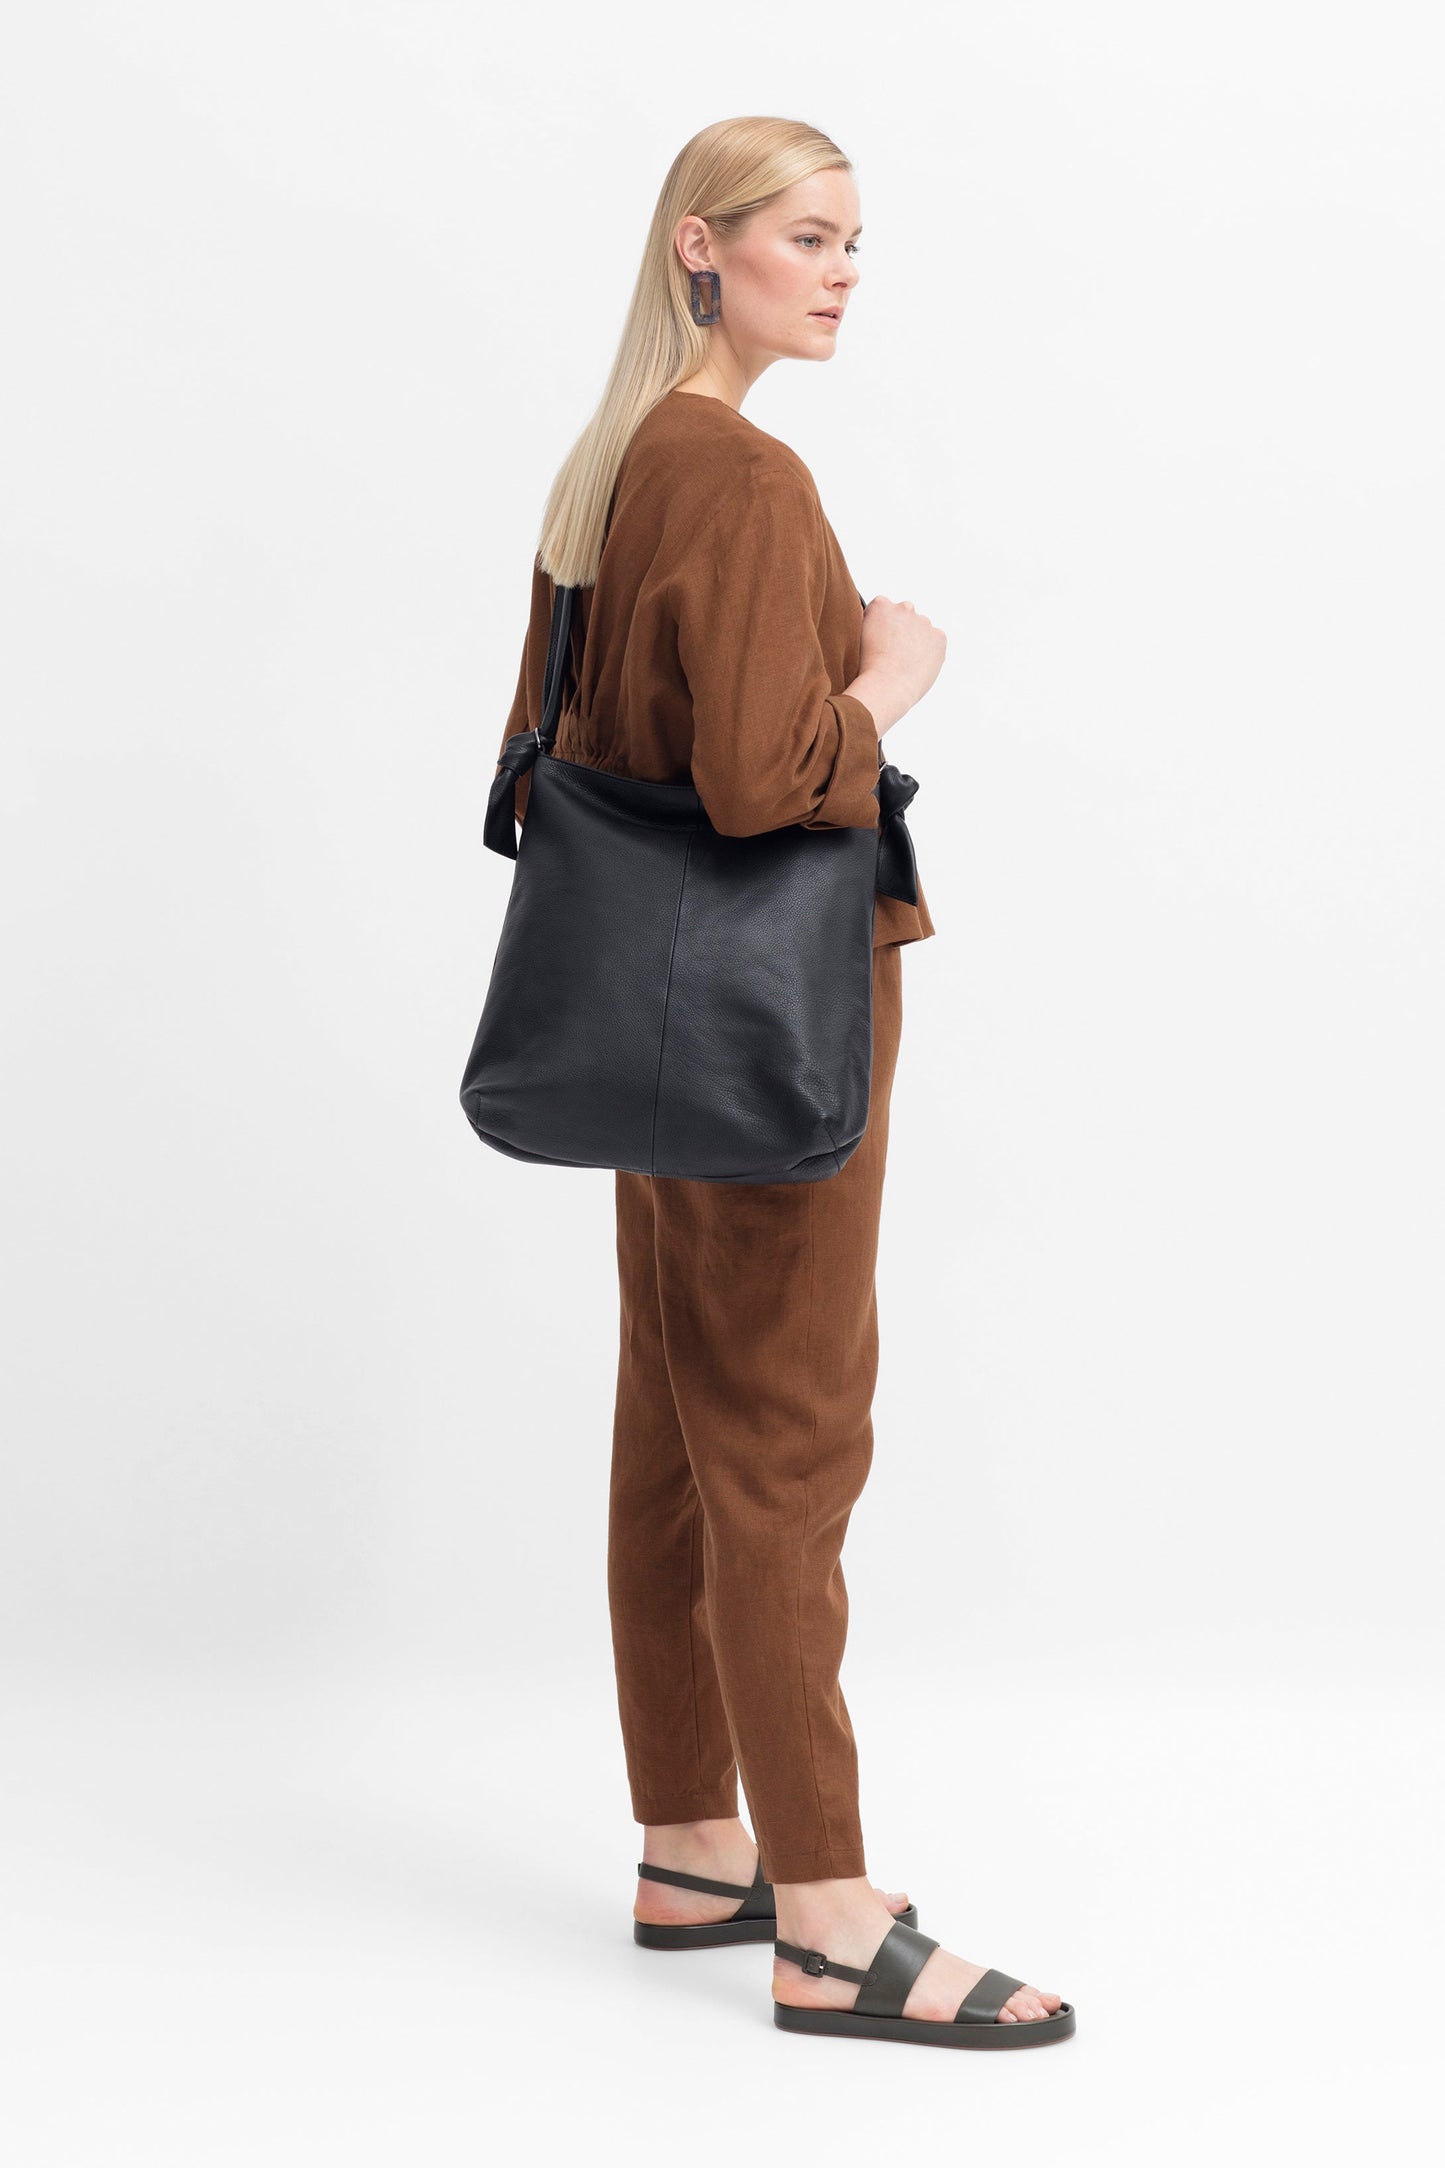 Meka Leather Knot Strap Tote Hand Bag Model across body BLACK